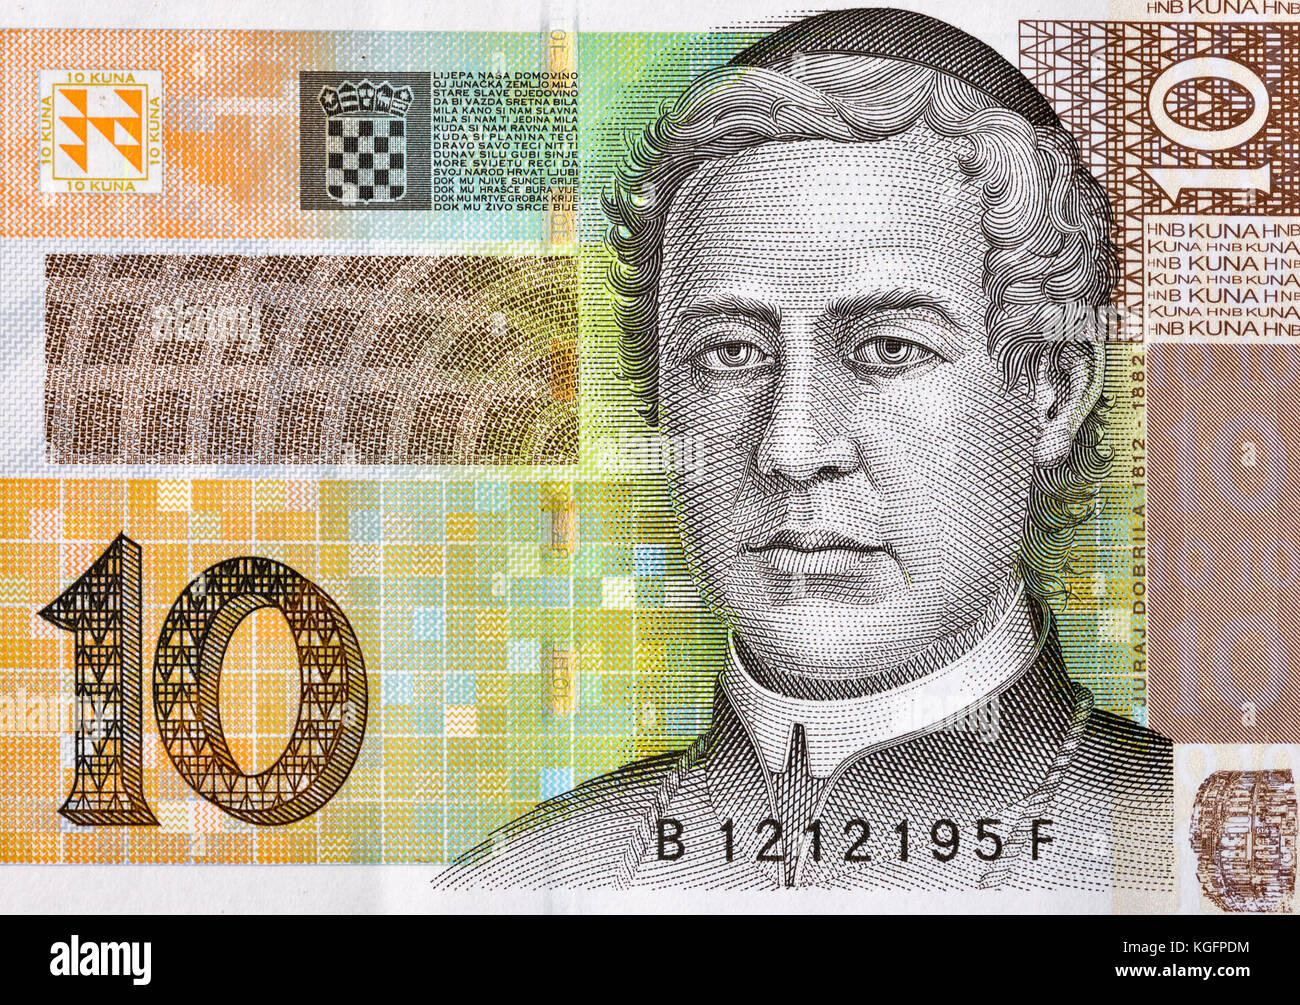 Croatian currency notes 10 Kuna banknote macro. Portrait of Bishop Juraj Dobrila. Stock Photo